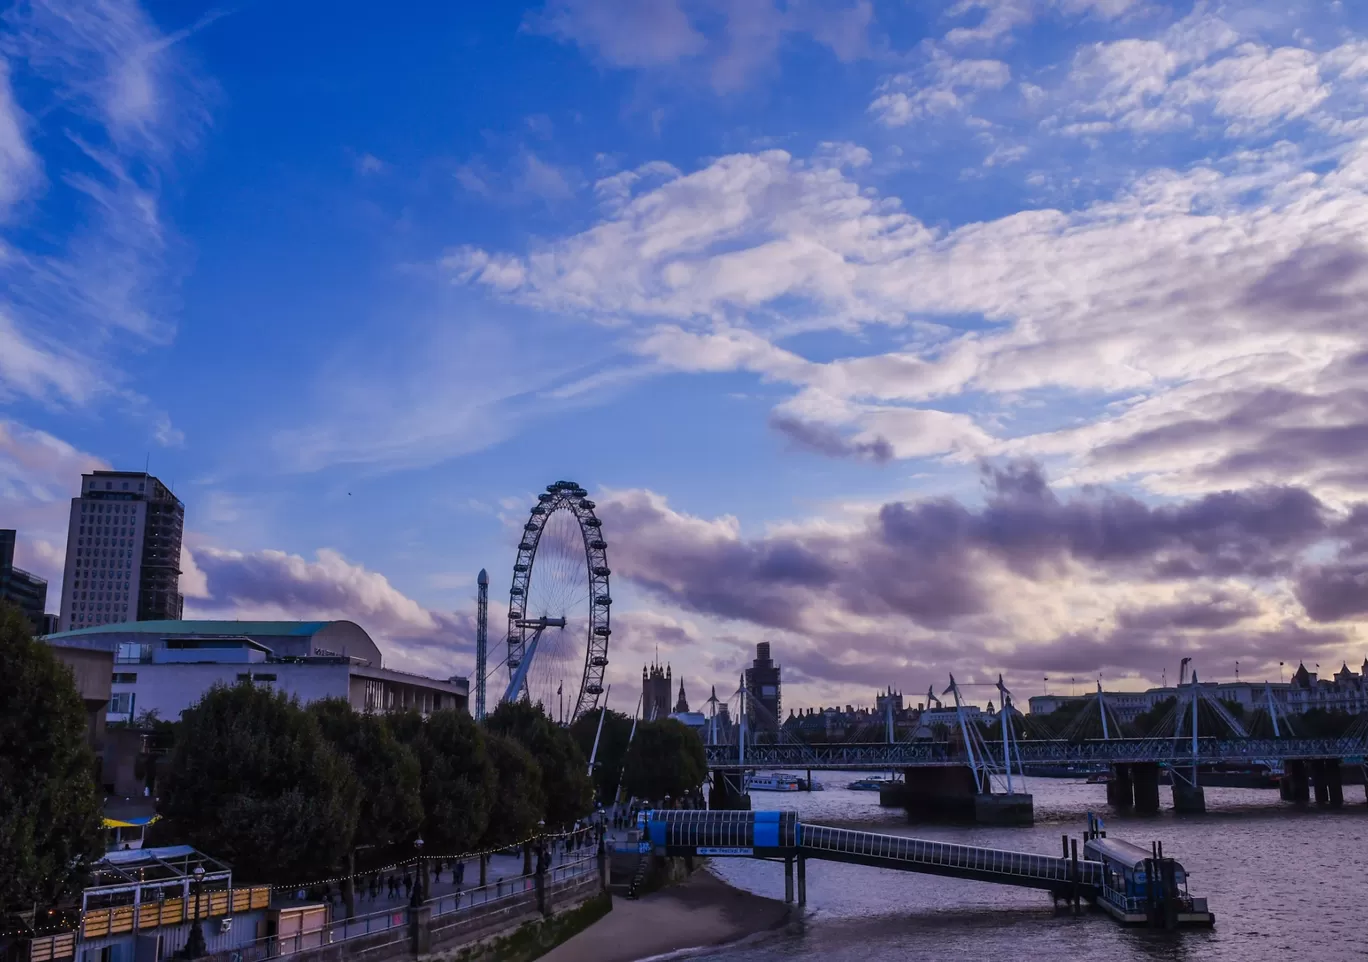 Photo of London Eye Waterloo Pier By Hussain Gavandhe